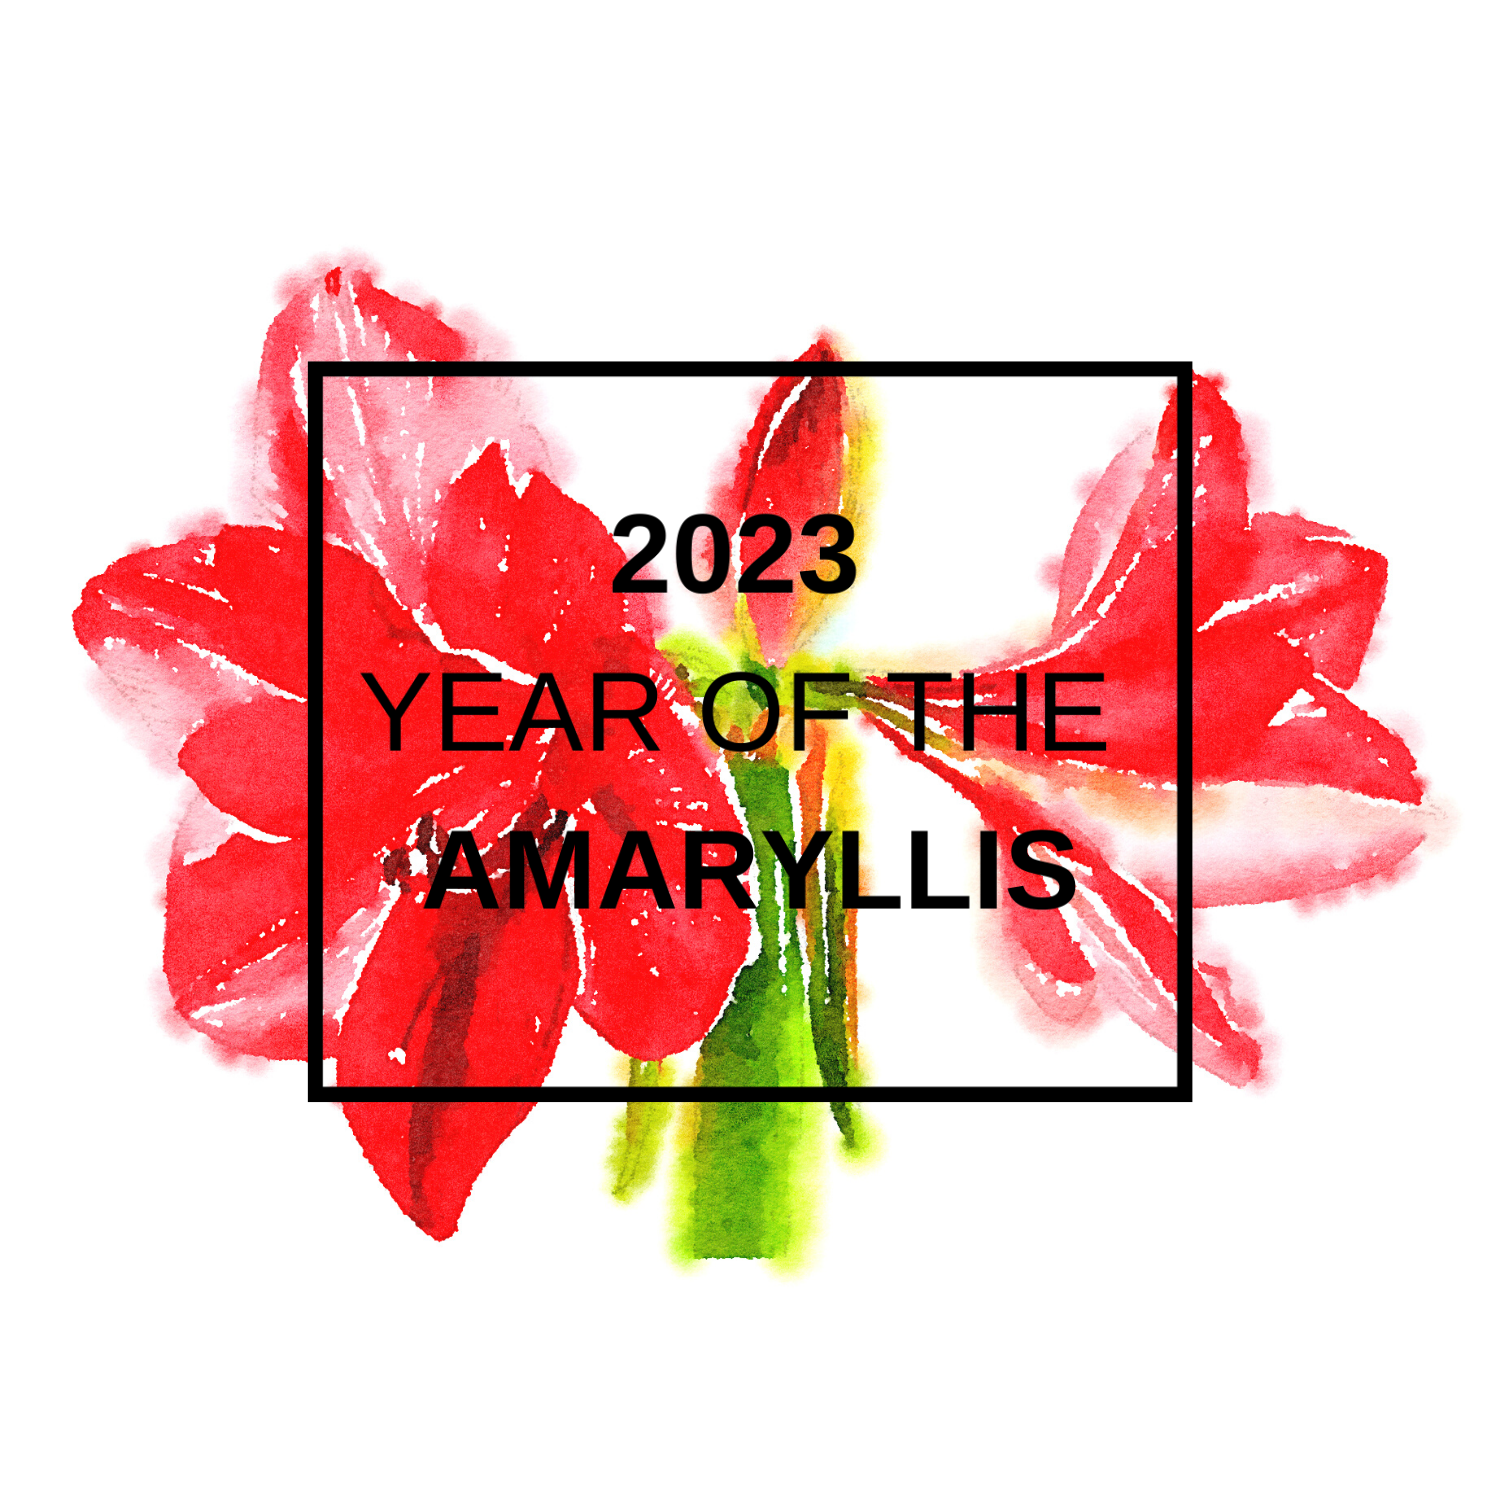 2023 Year of the Amaryllis cropped